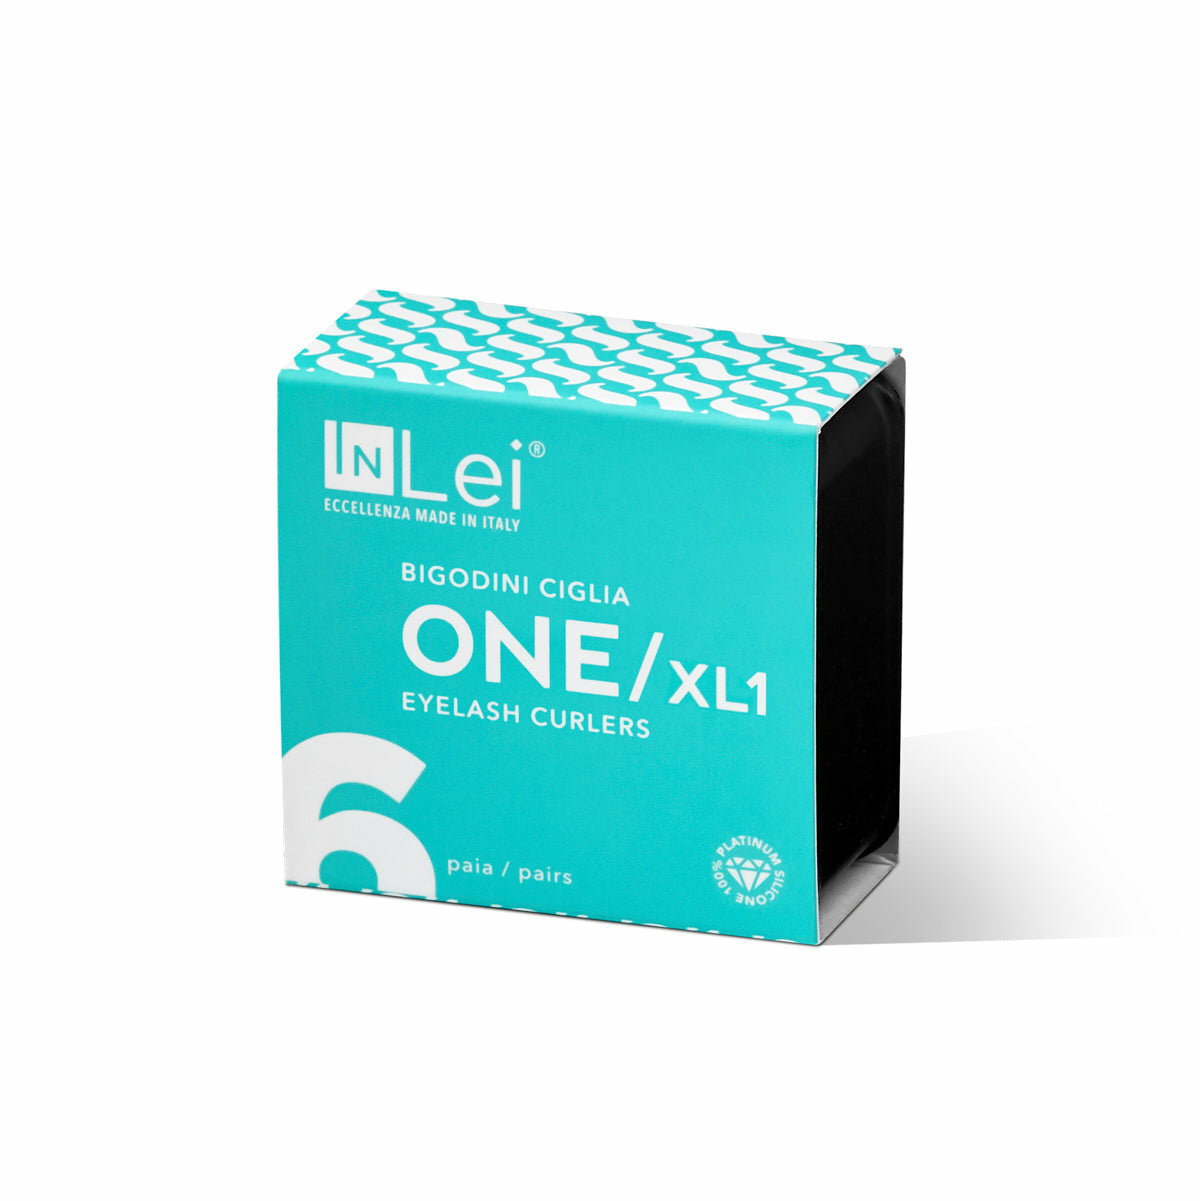 InLei® “ONE” - Silicone Shields XL1